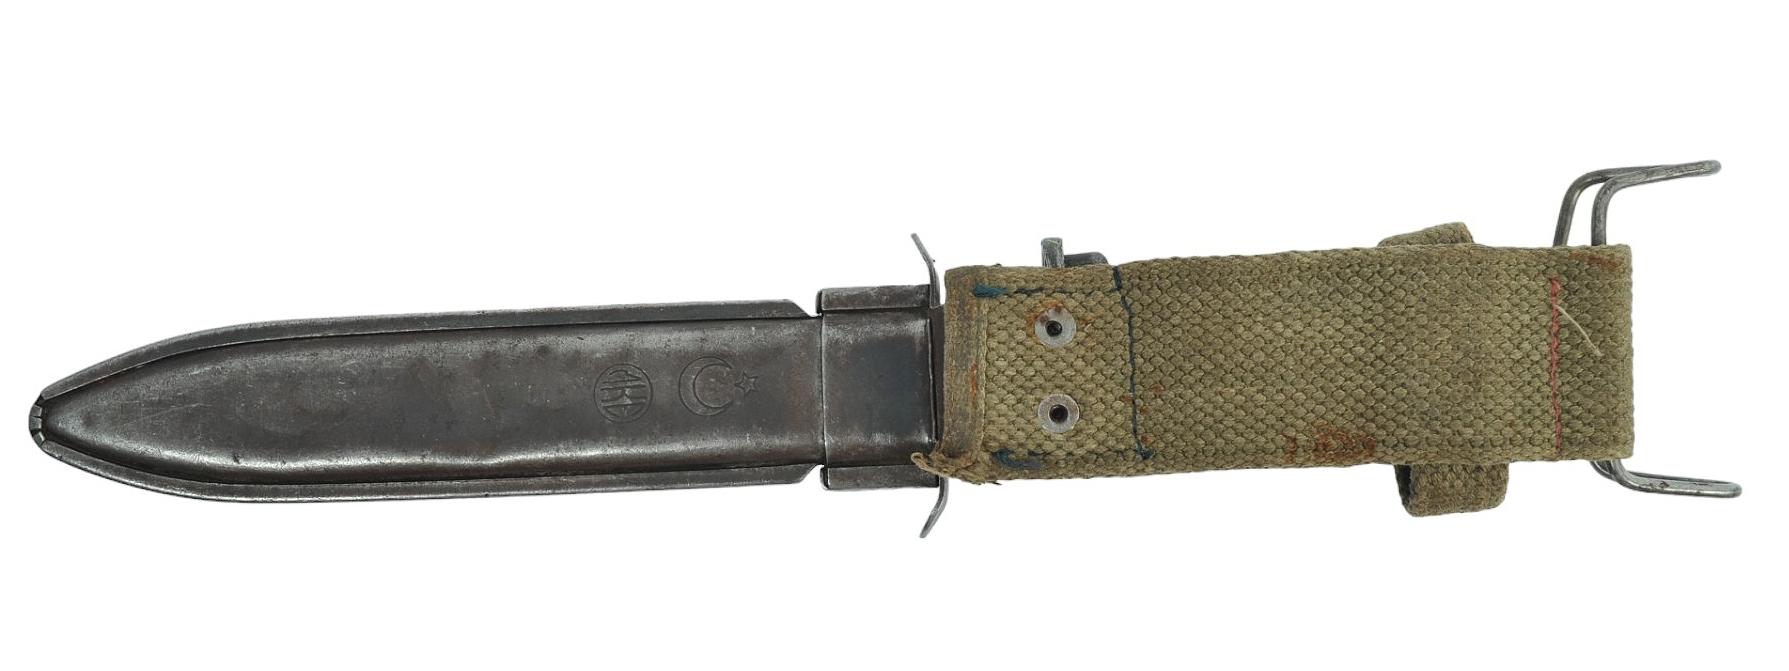 Turkish Modified Mauser Bayonet into an M1 Garand Bayonet (MAT)